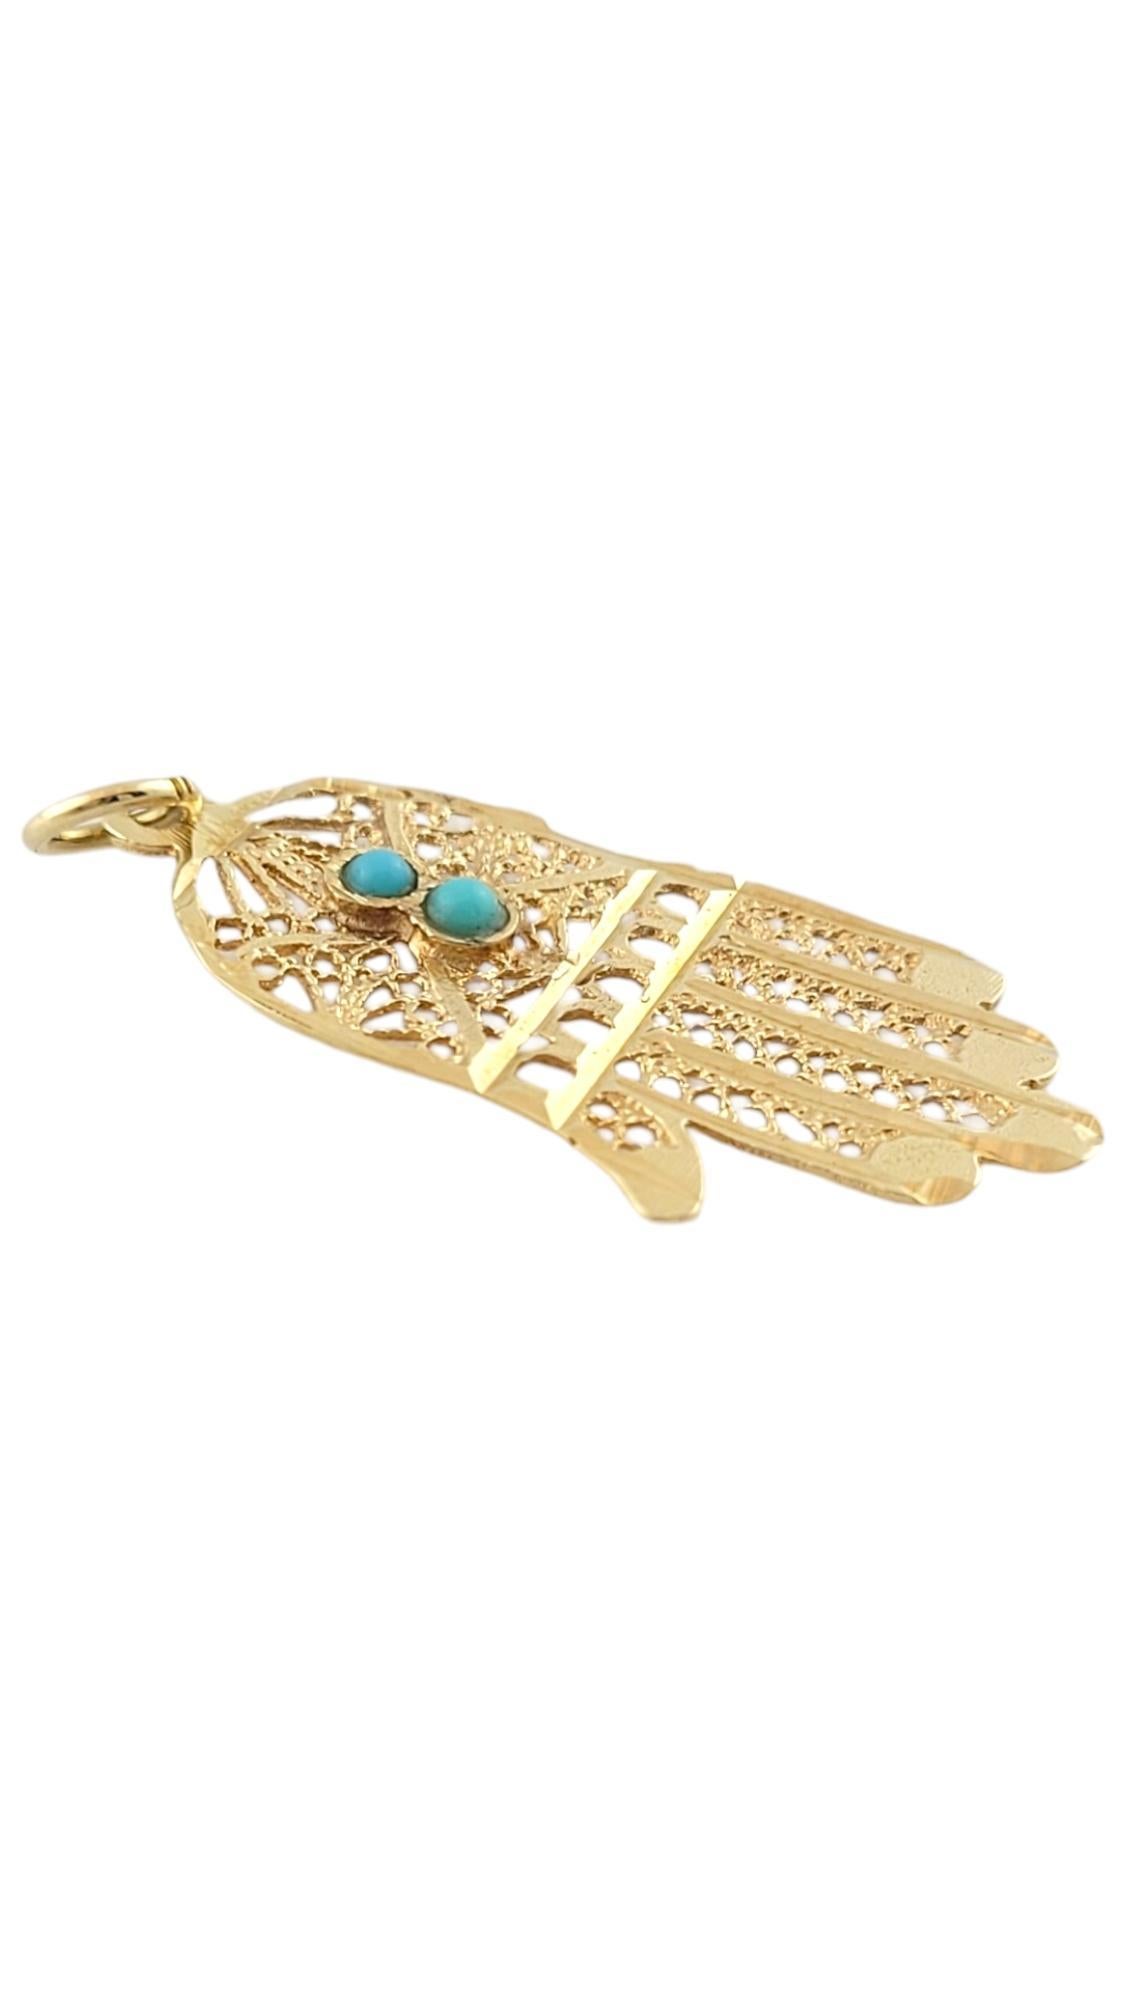 Bead 14K Yellow Gold Hamsa Hand Charm with Turquoise Stones #16205